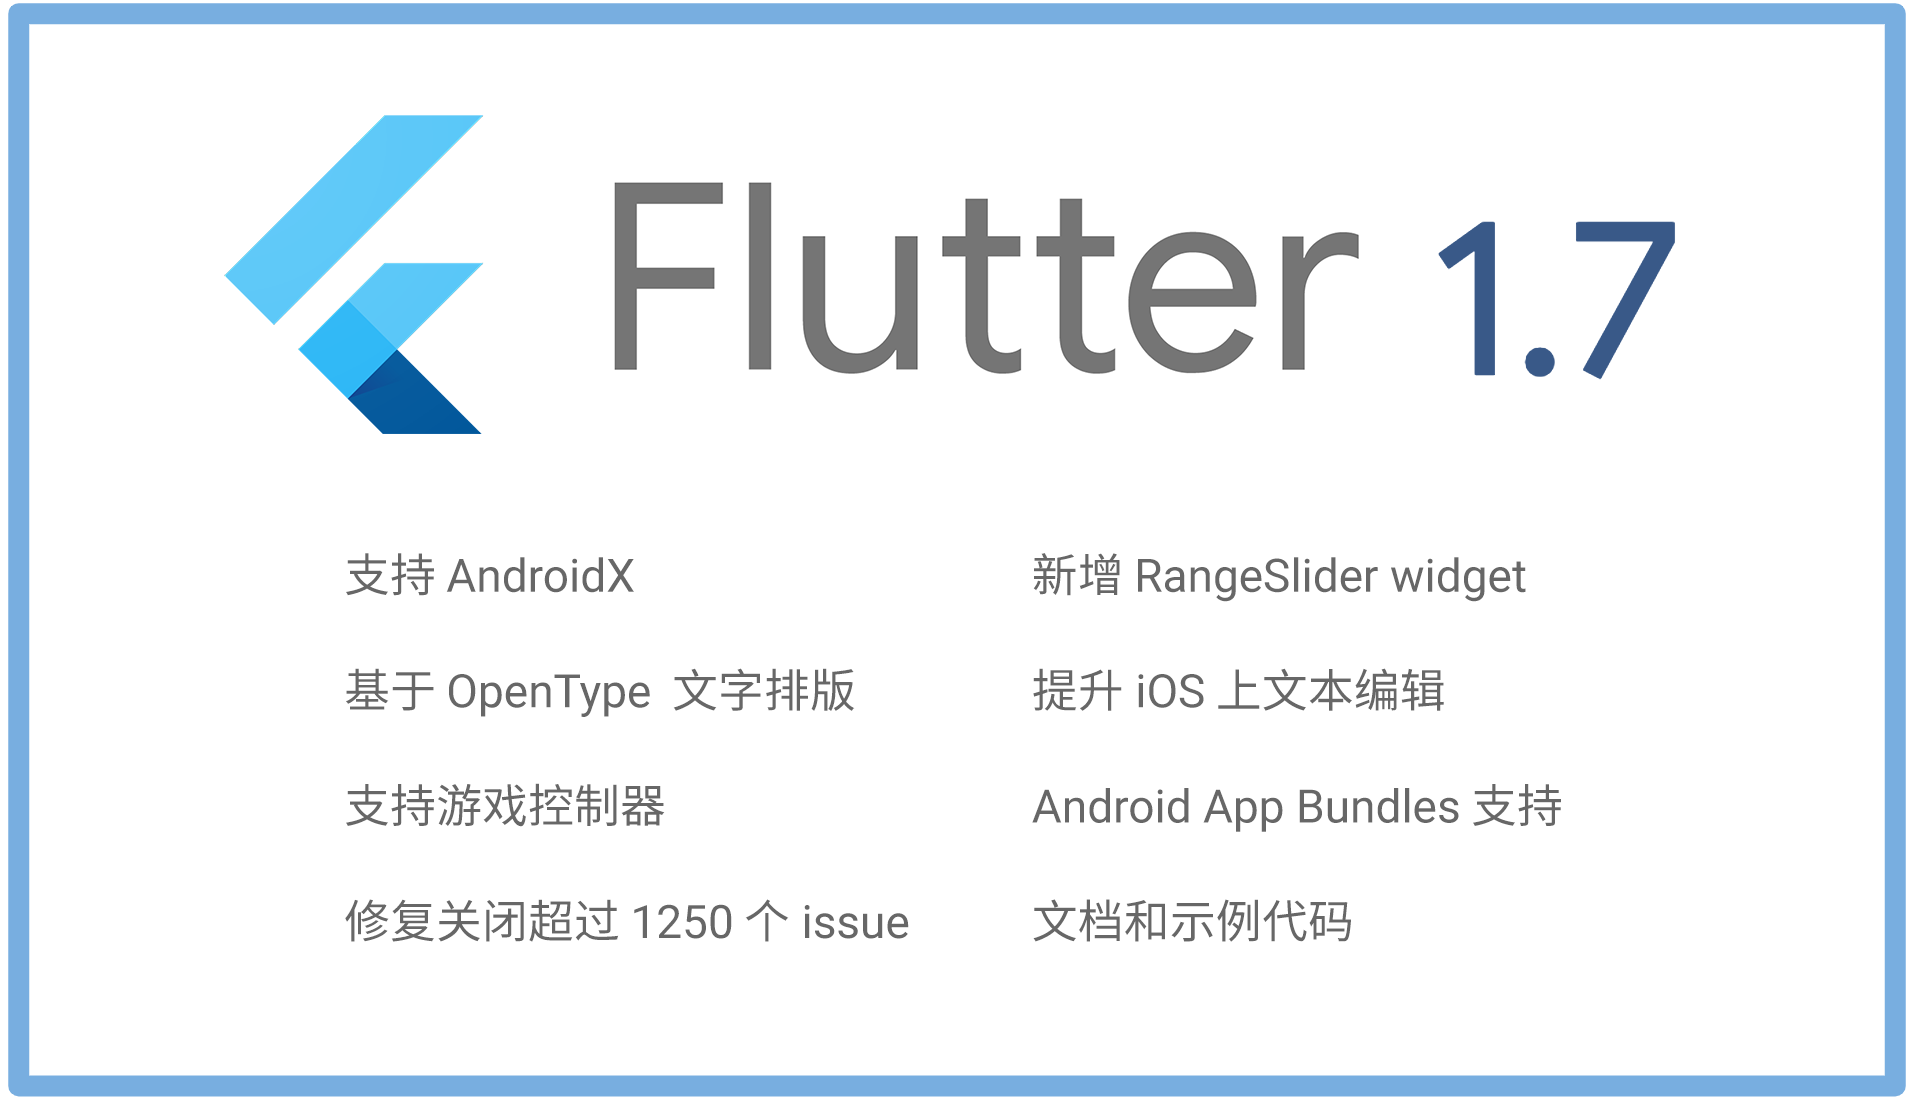 Flutter 1.7 official release